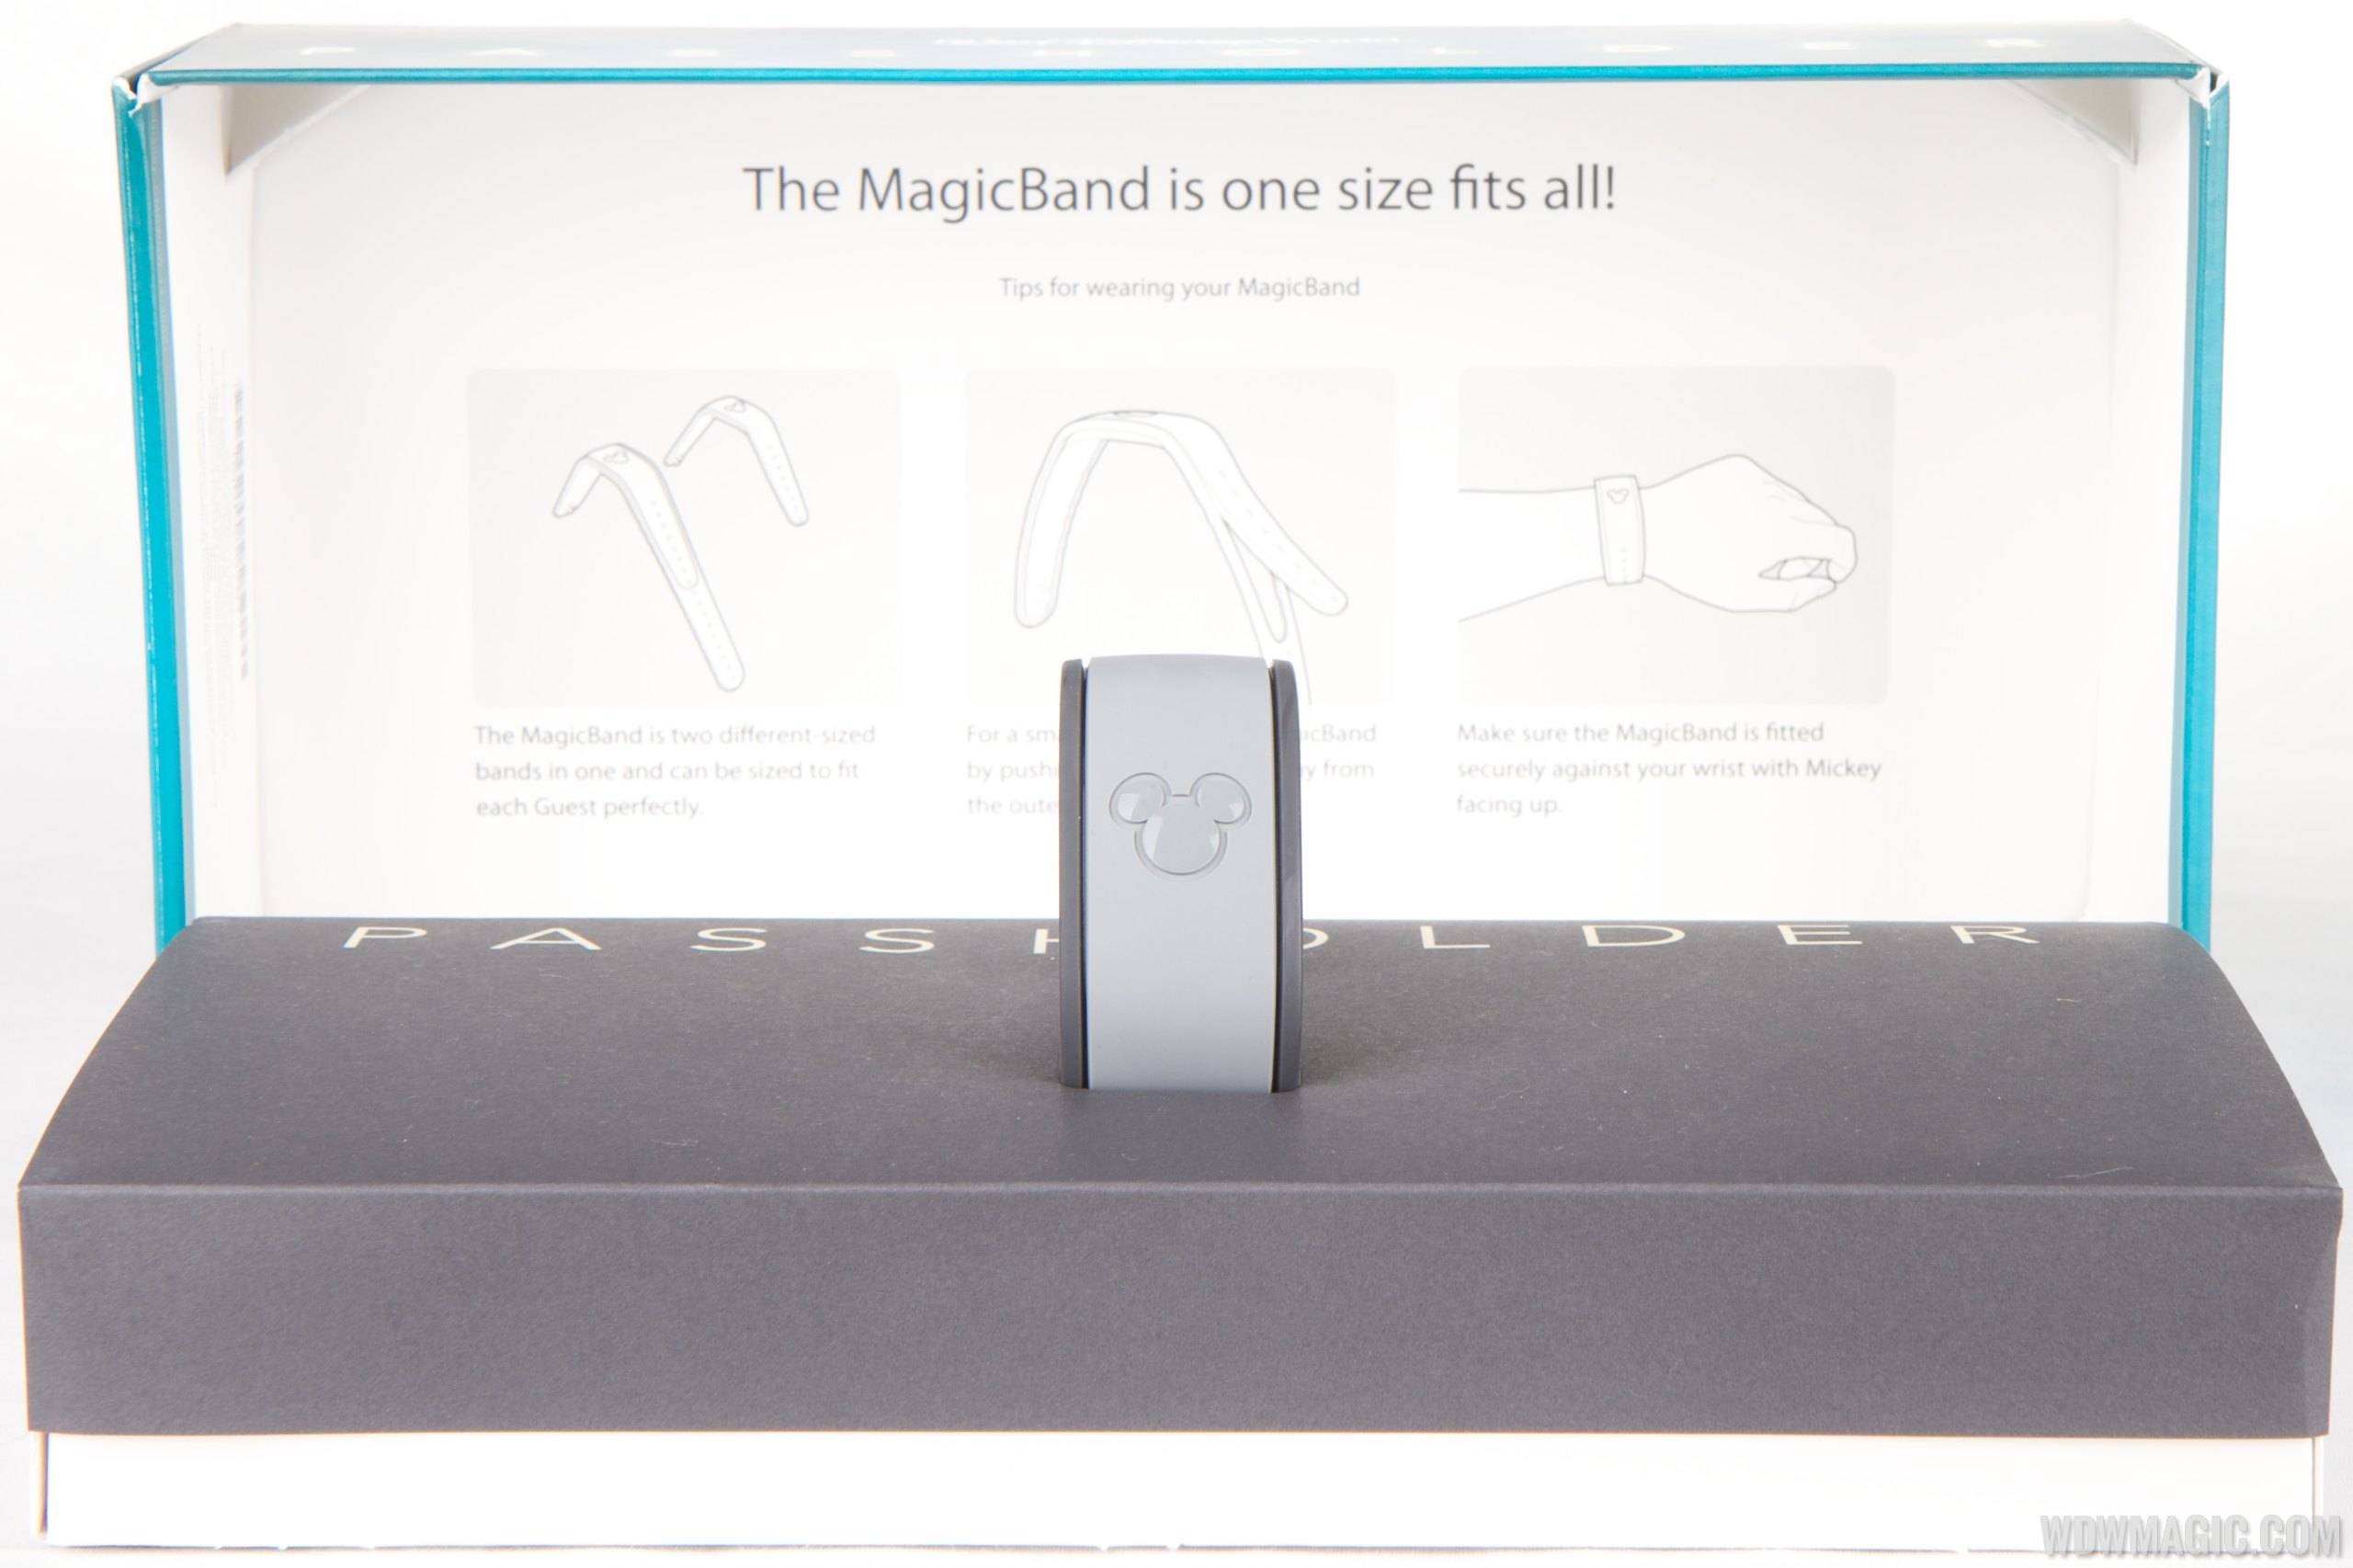 Passholder MagicBand inside the box